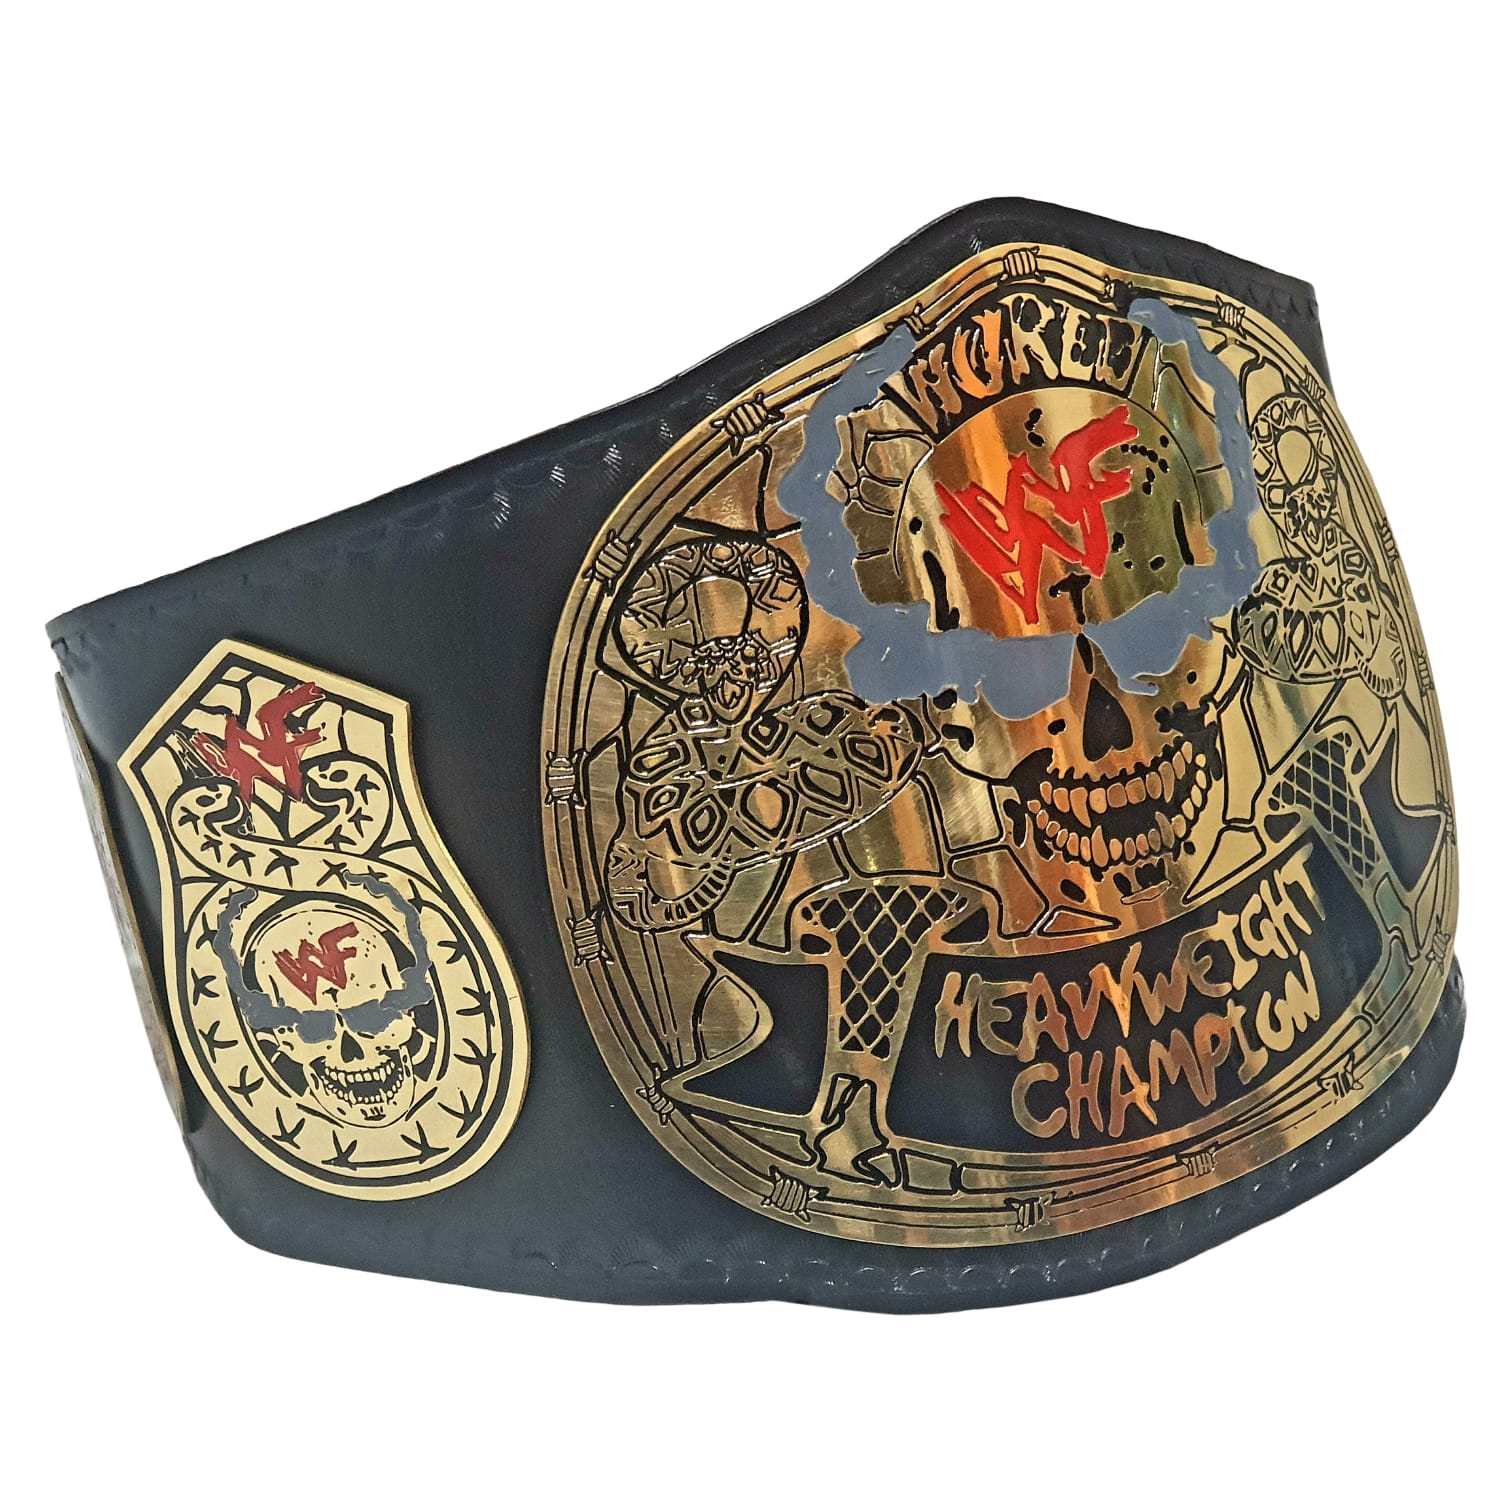 World Heavyweight Championship Wresling belt -02